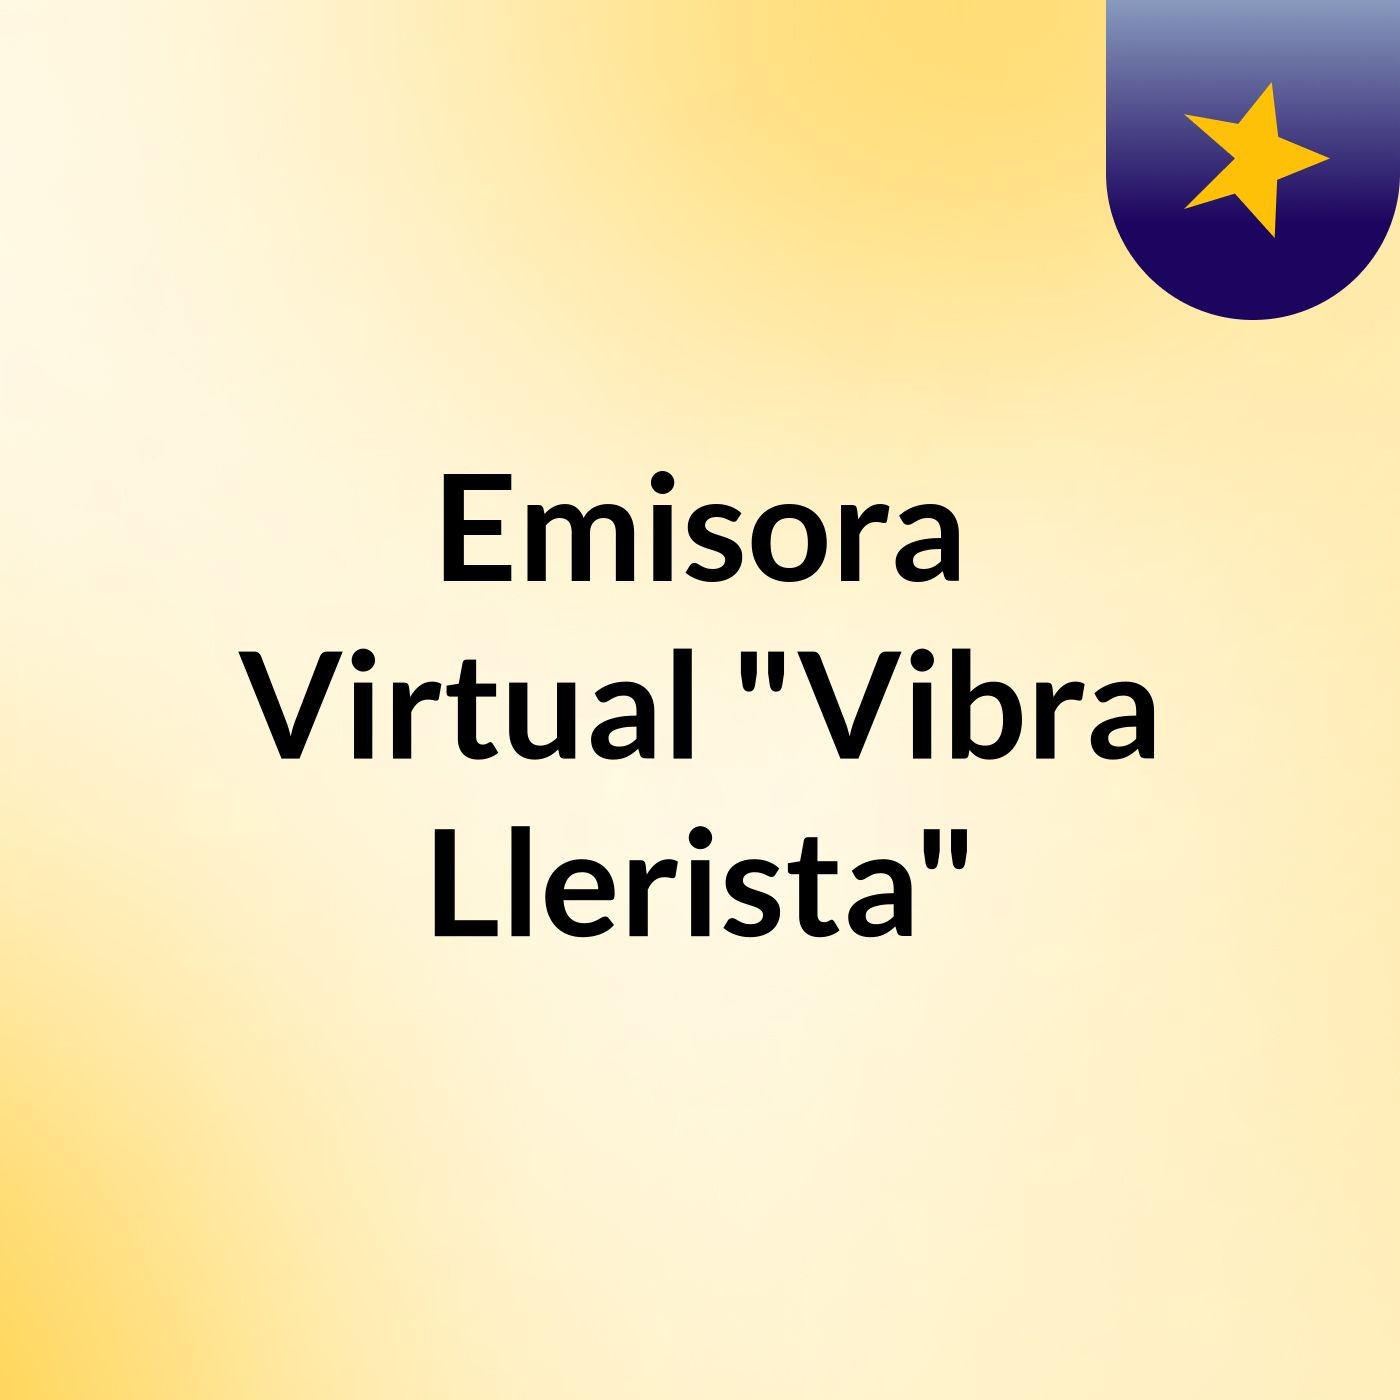 Emisora Virtual "Vibra Llerista"